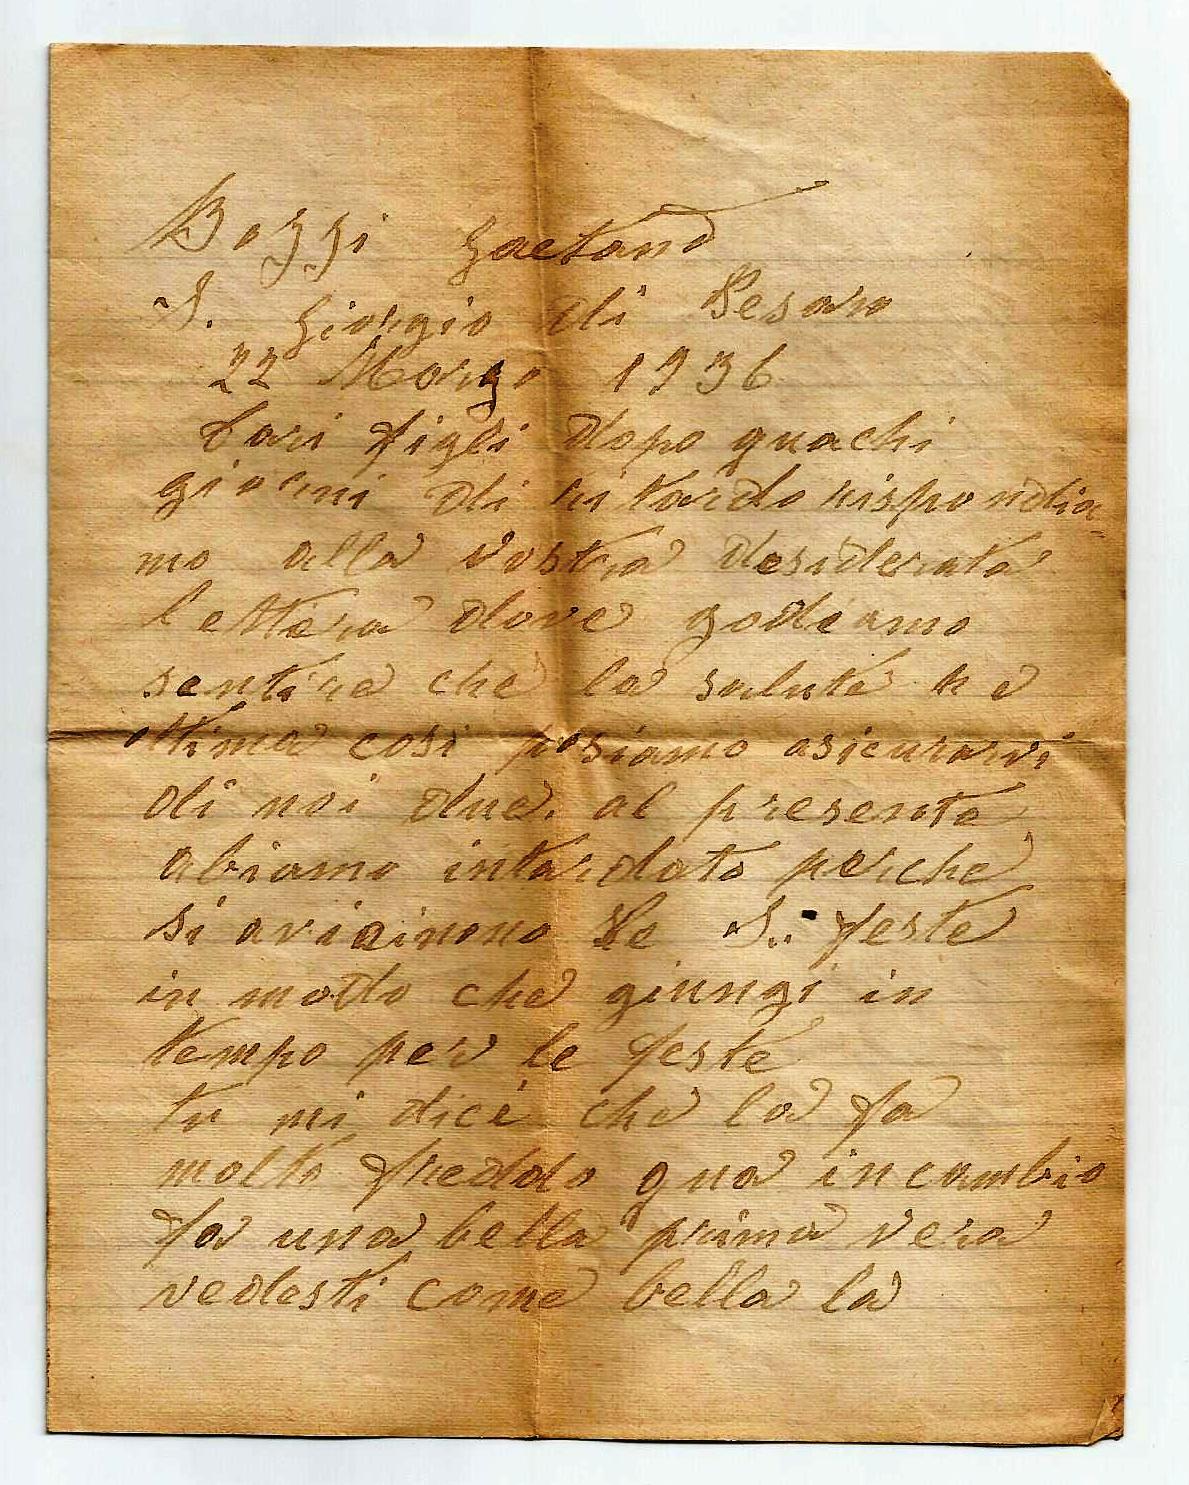 Scan of a letter written in Italian from Gaetano Bozzi to his daughter Guerina Bozzi Talevi.